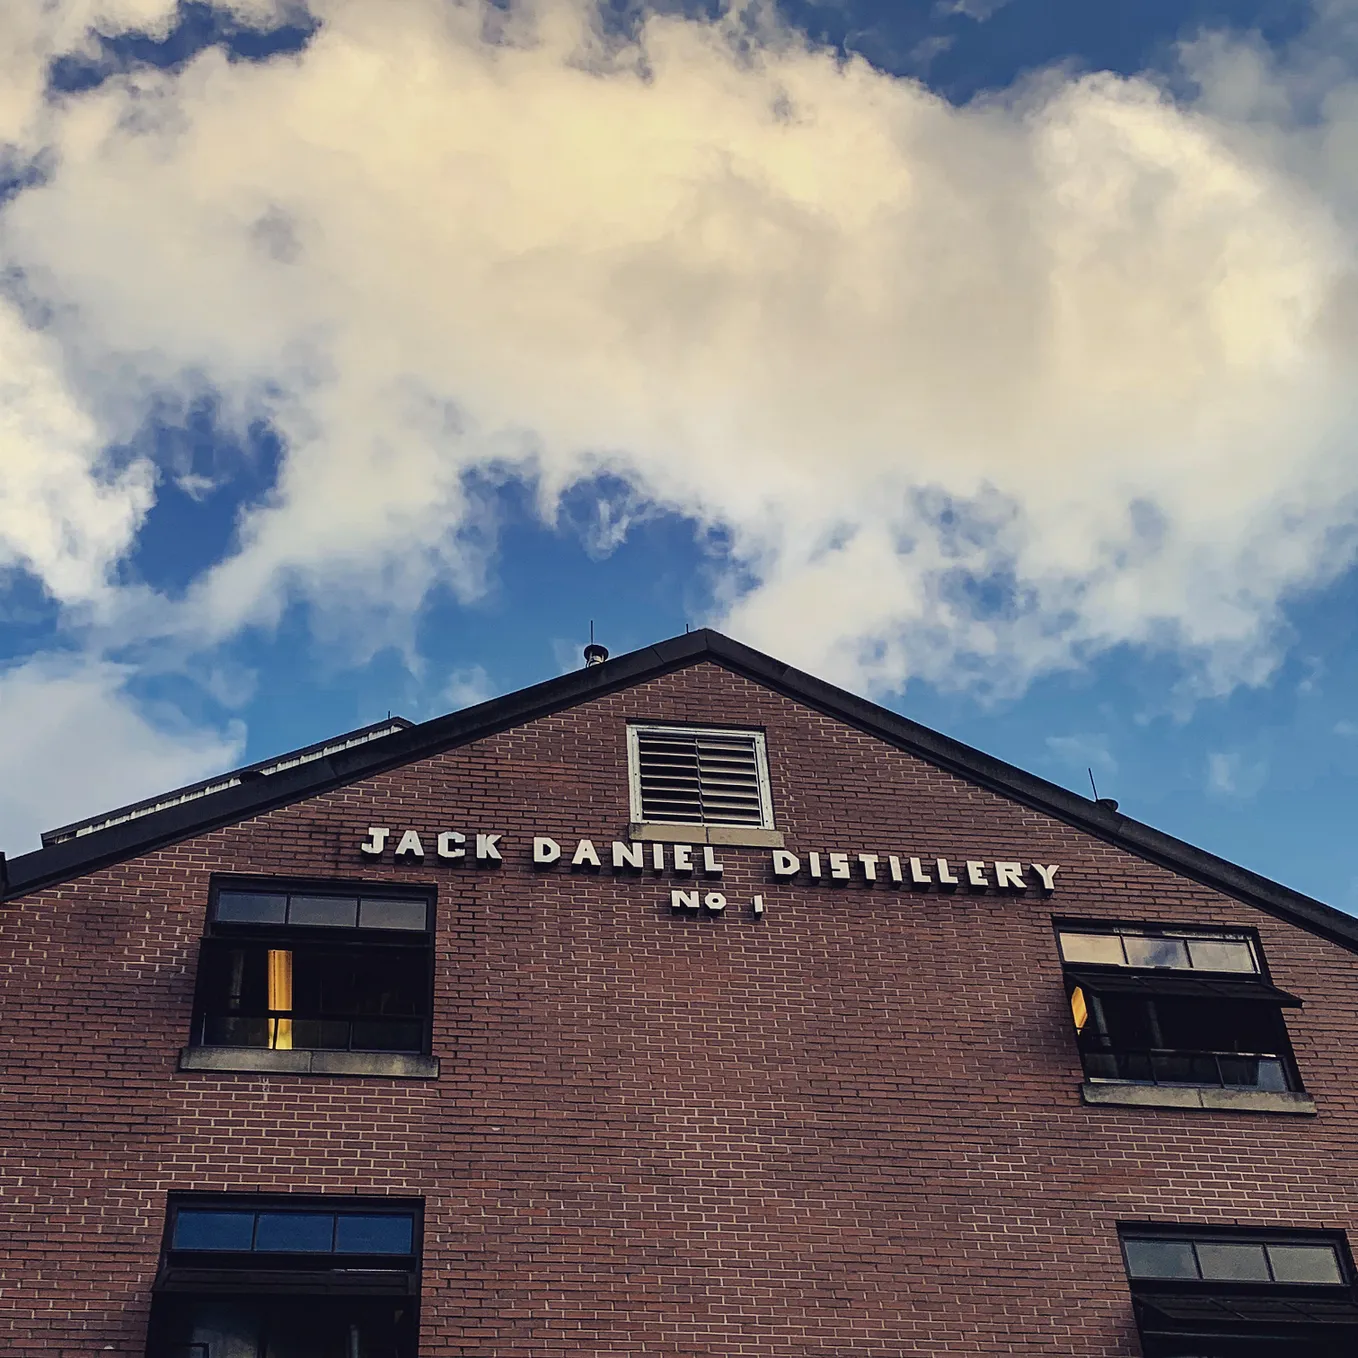 Visiting Jack Daniel’s Distillery